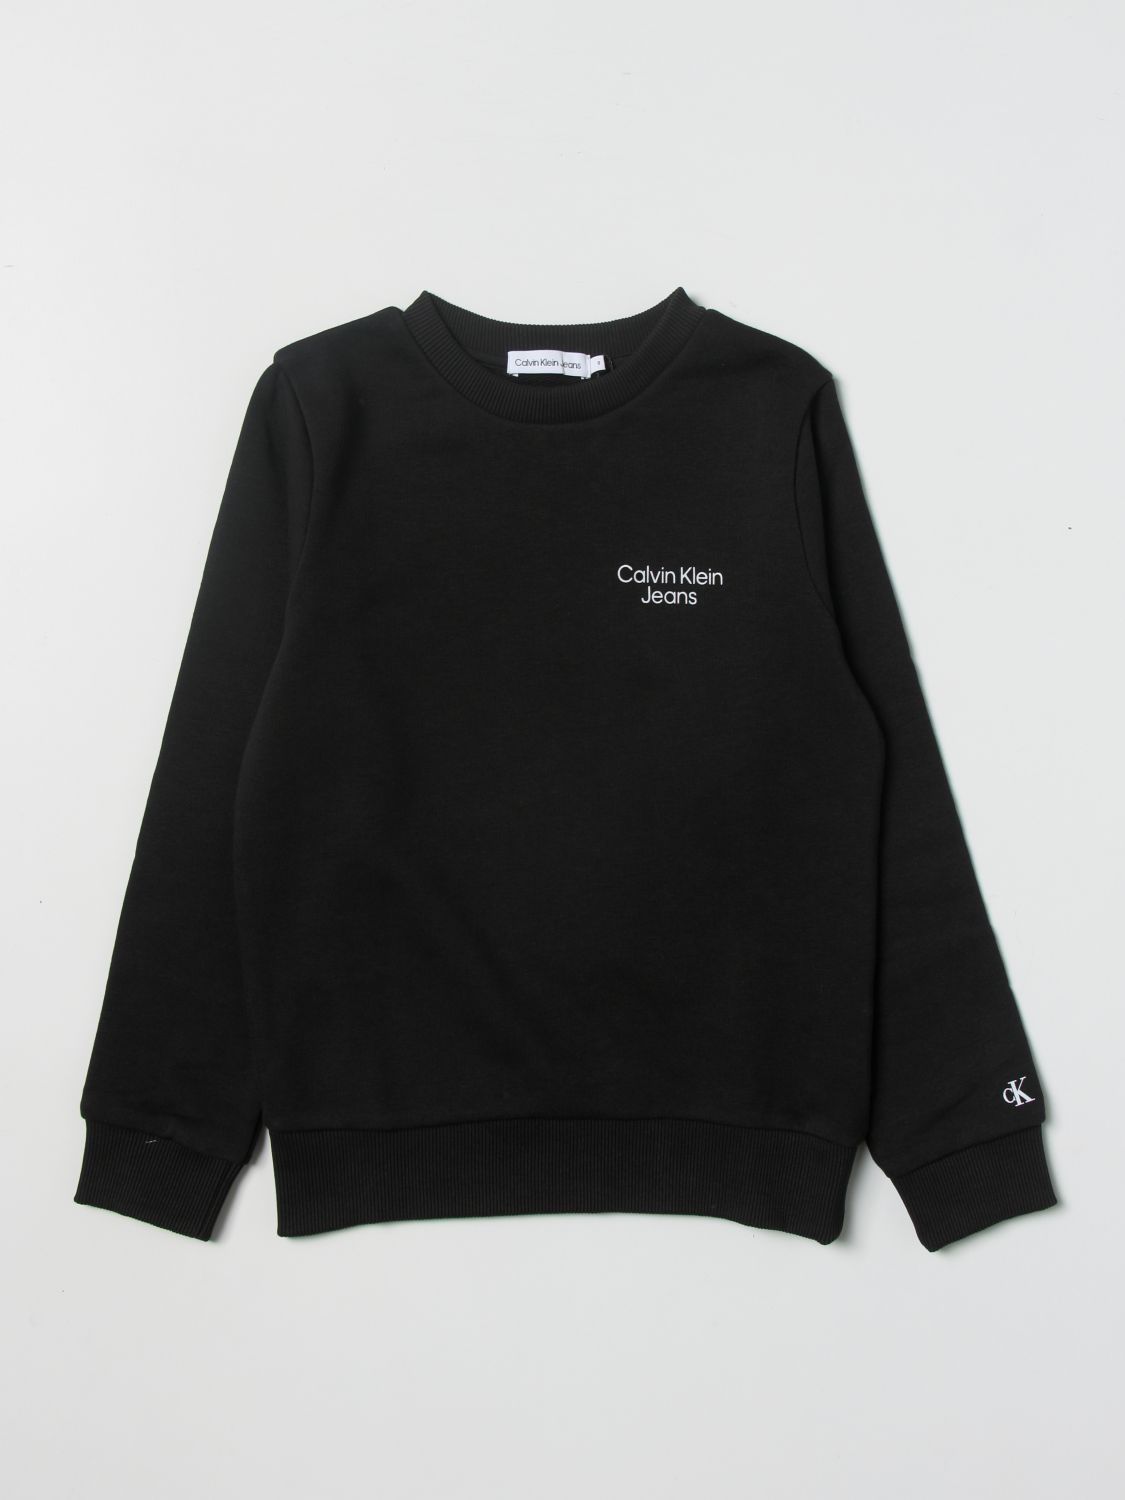 Calvin Klein Outlet: sweater for boys - Calvin Klein sweater online GIGLIO.COM